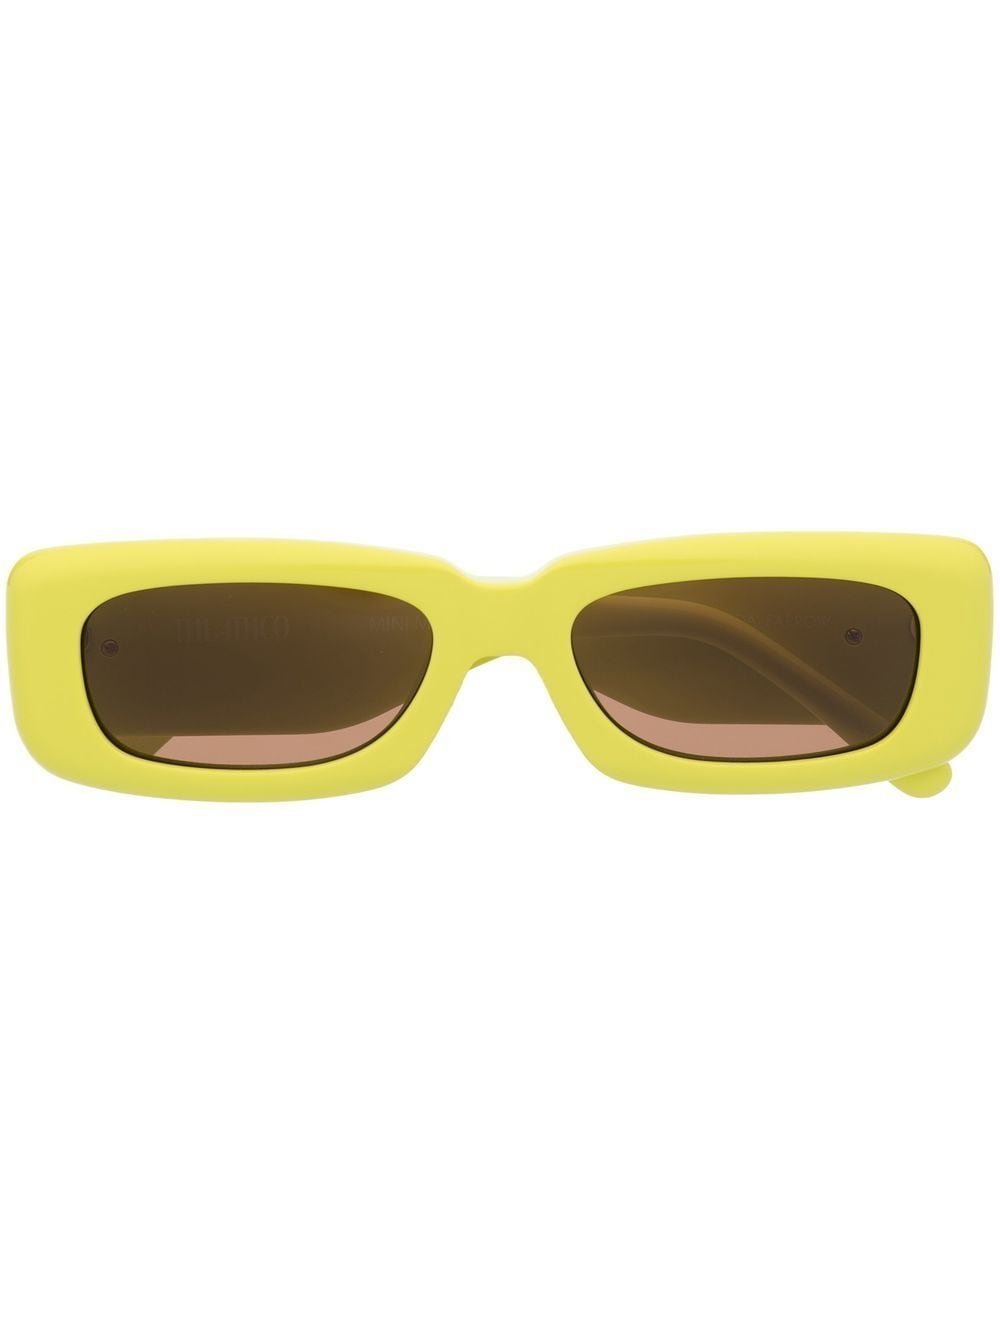 The Attico Marfa rectangular-frame sunglasses